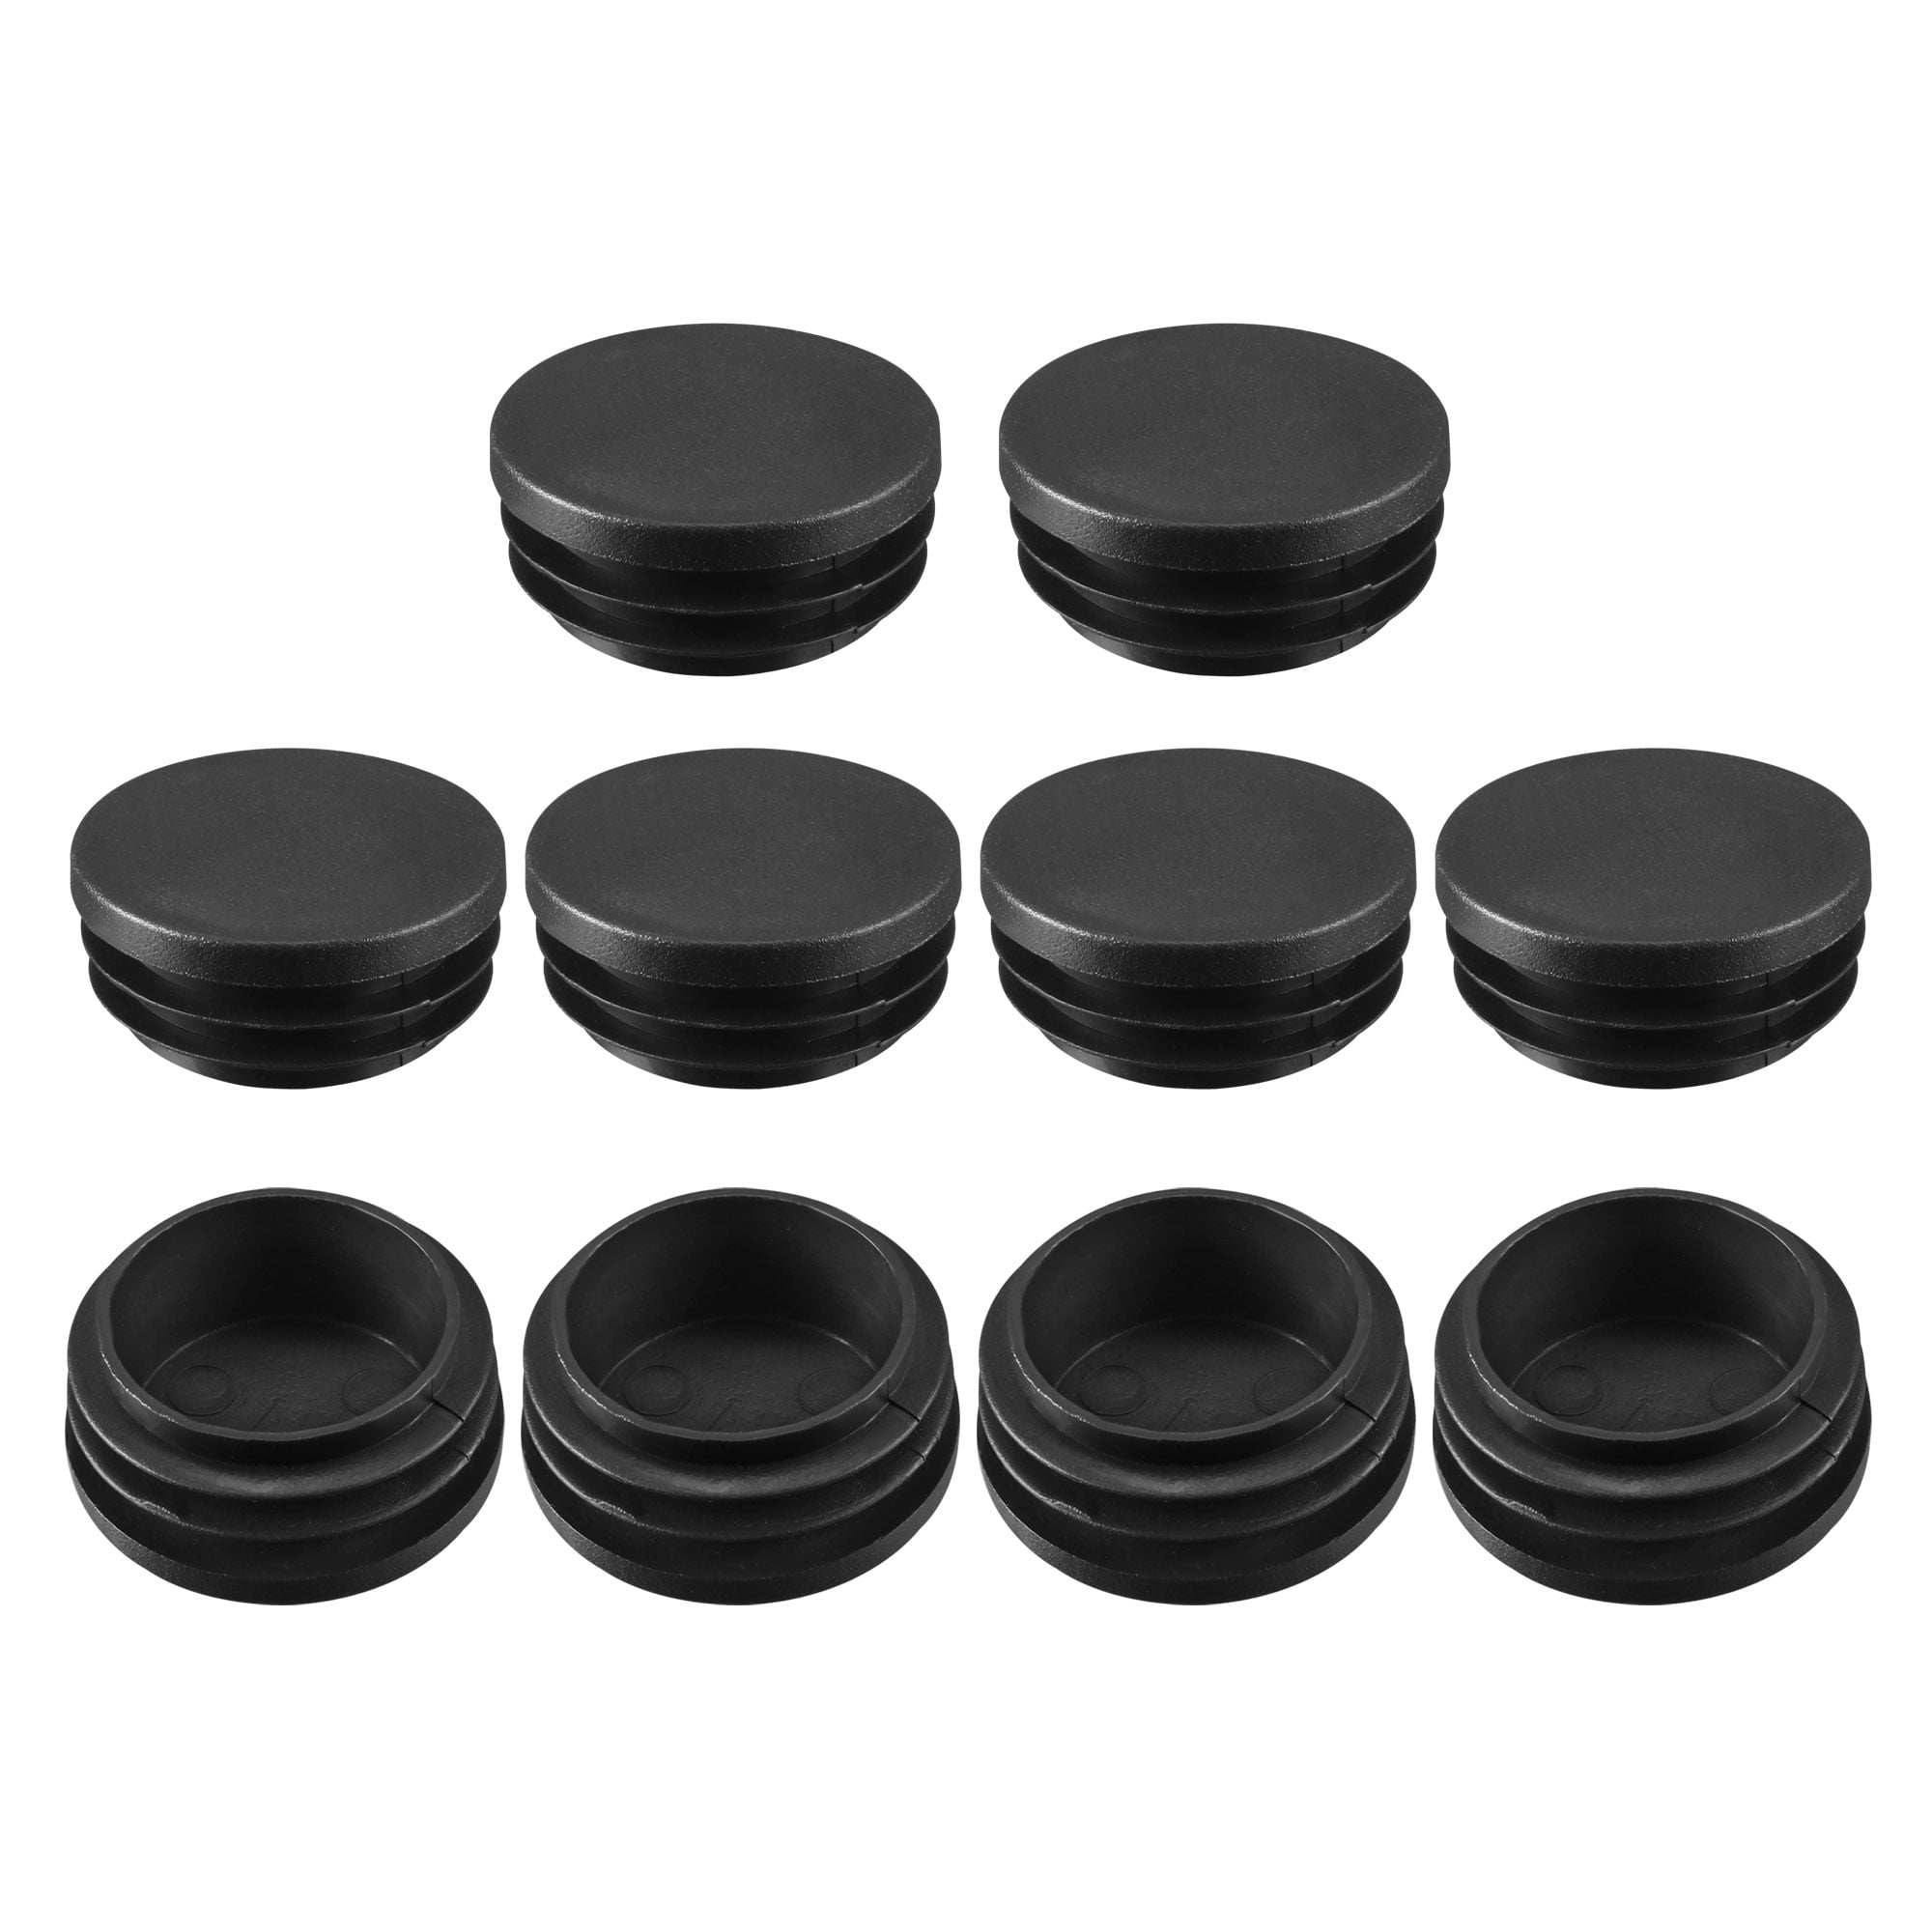 3 Pcs Round black plastic insert plugs end caps various sizes 34mm 